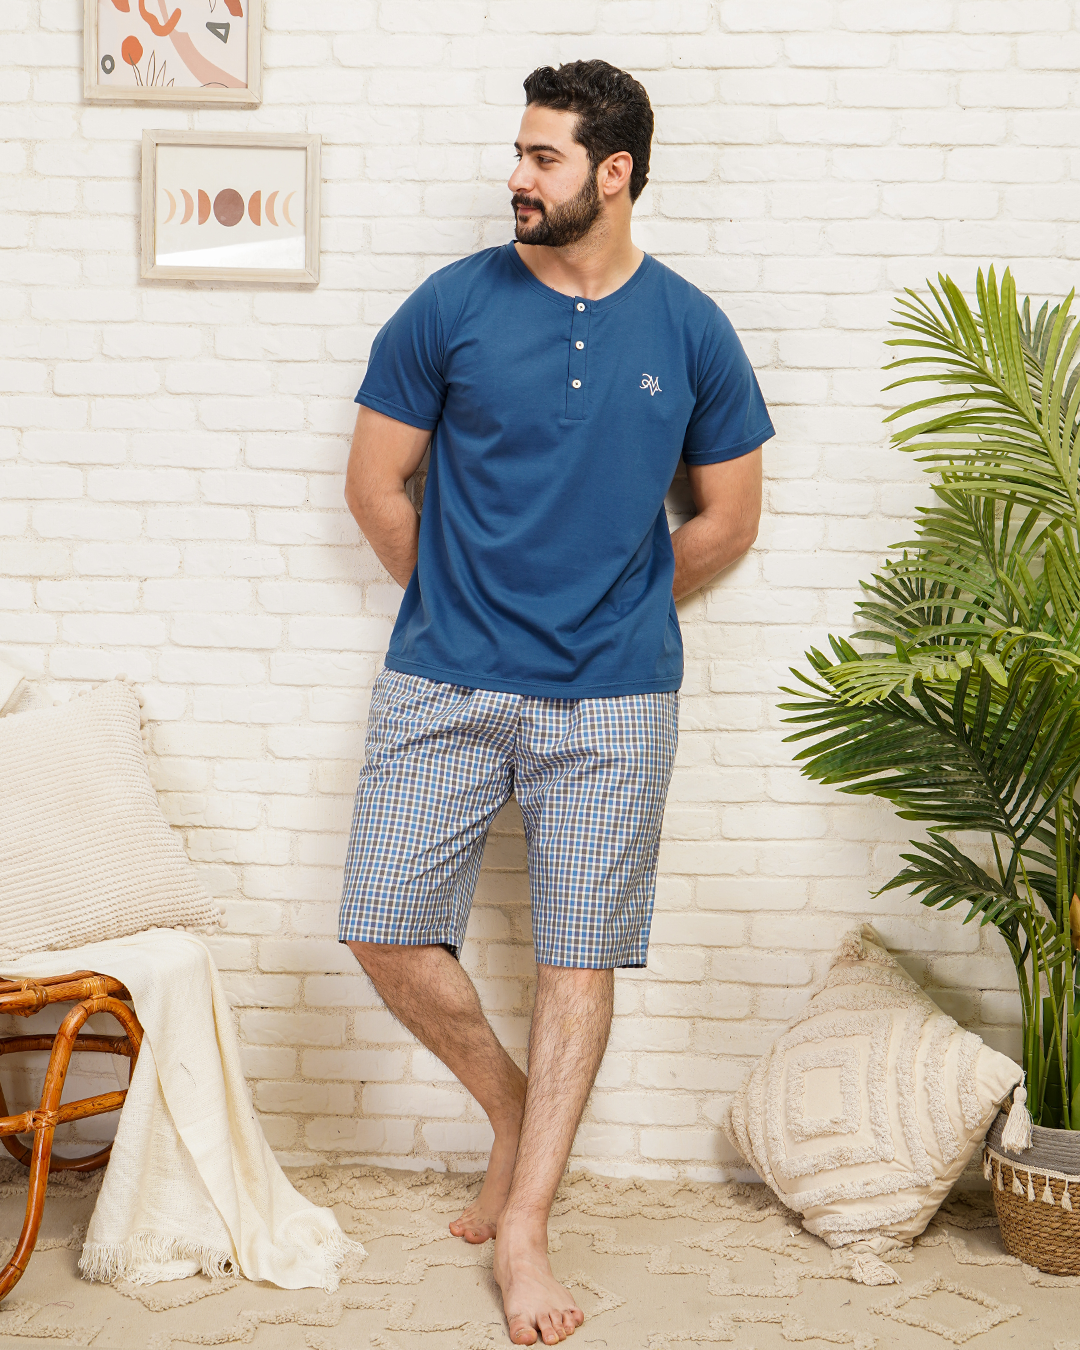 Men's pajamas, half sleeves, button-down bands and checkered shorts